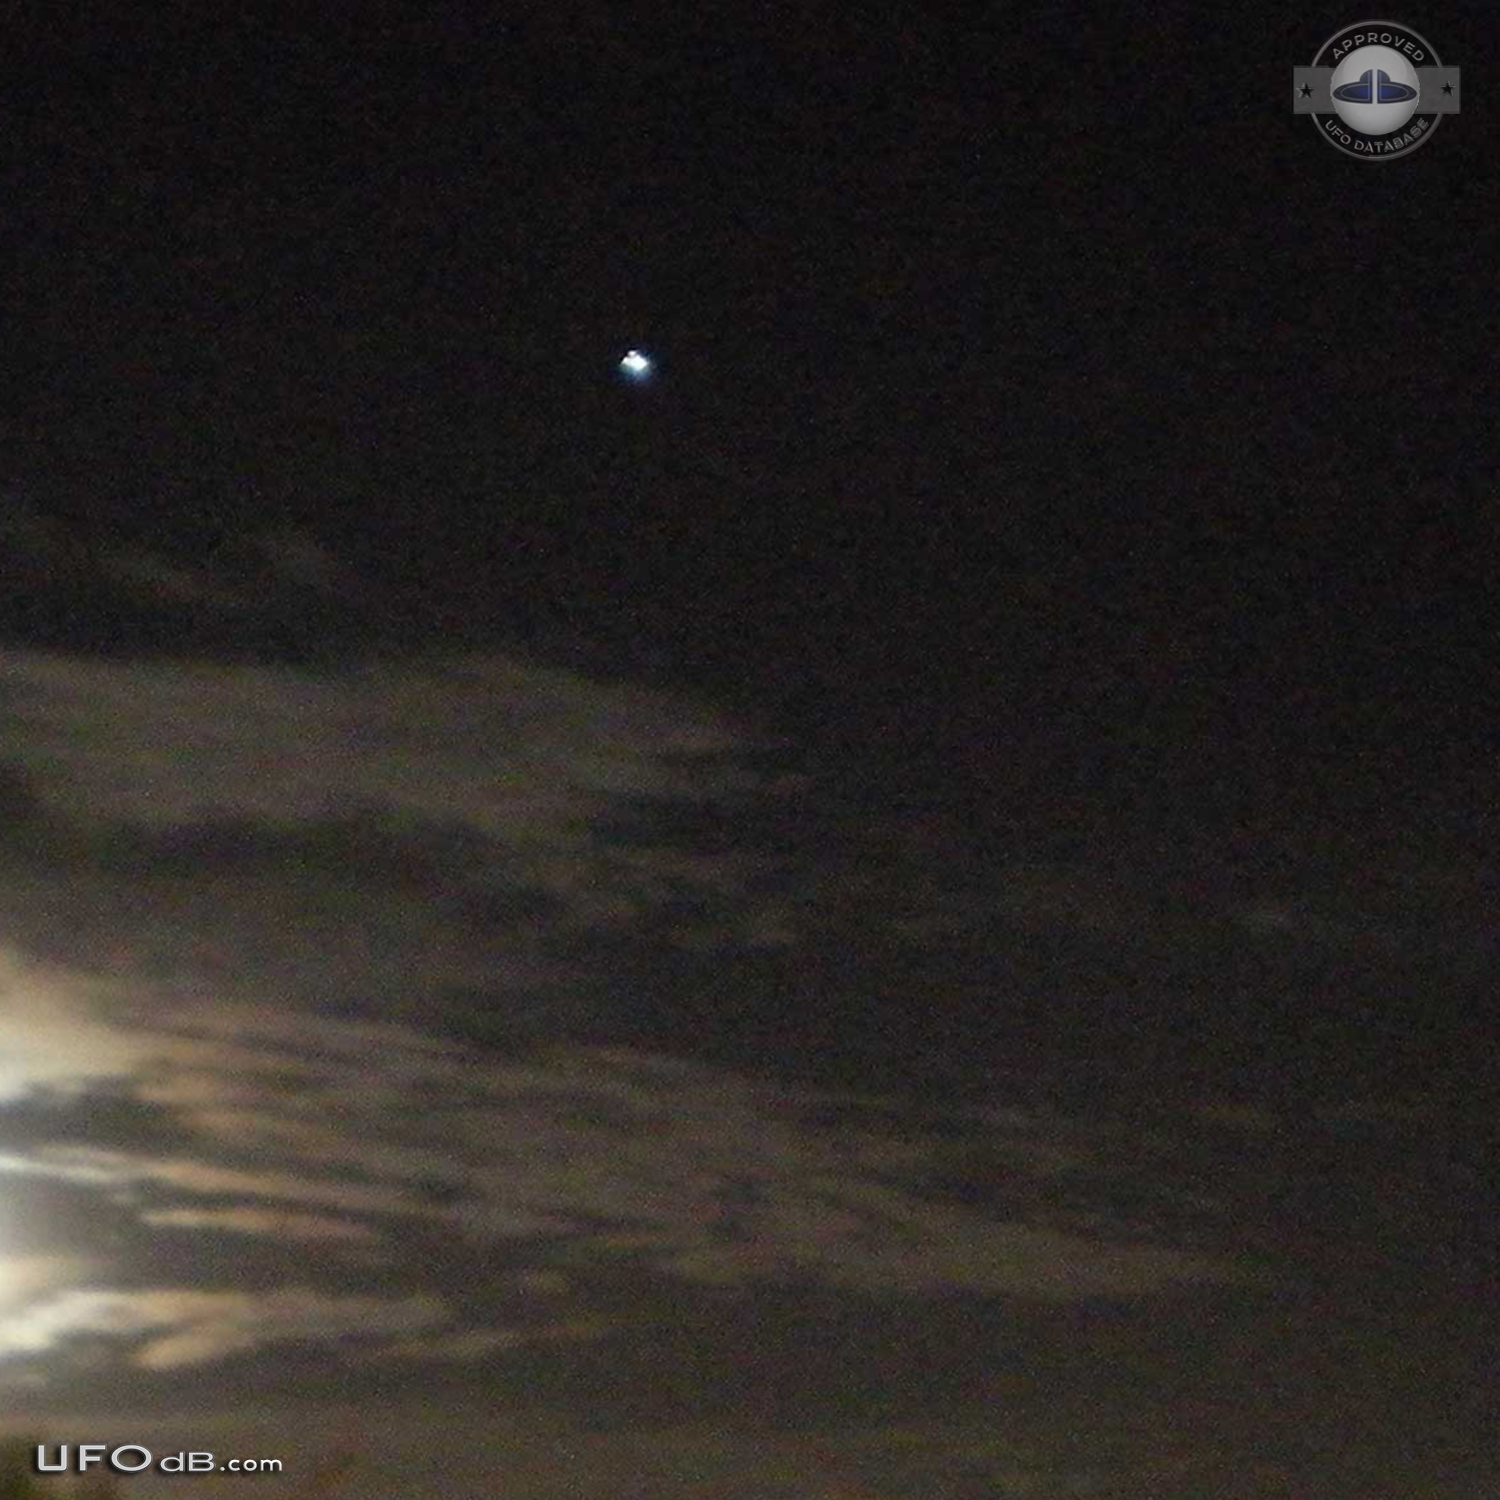 Moon picture reveals bright UFO in the night sky in Ecuador in 2009 UFO Picture #446-2